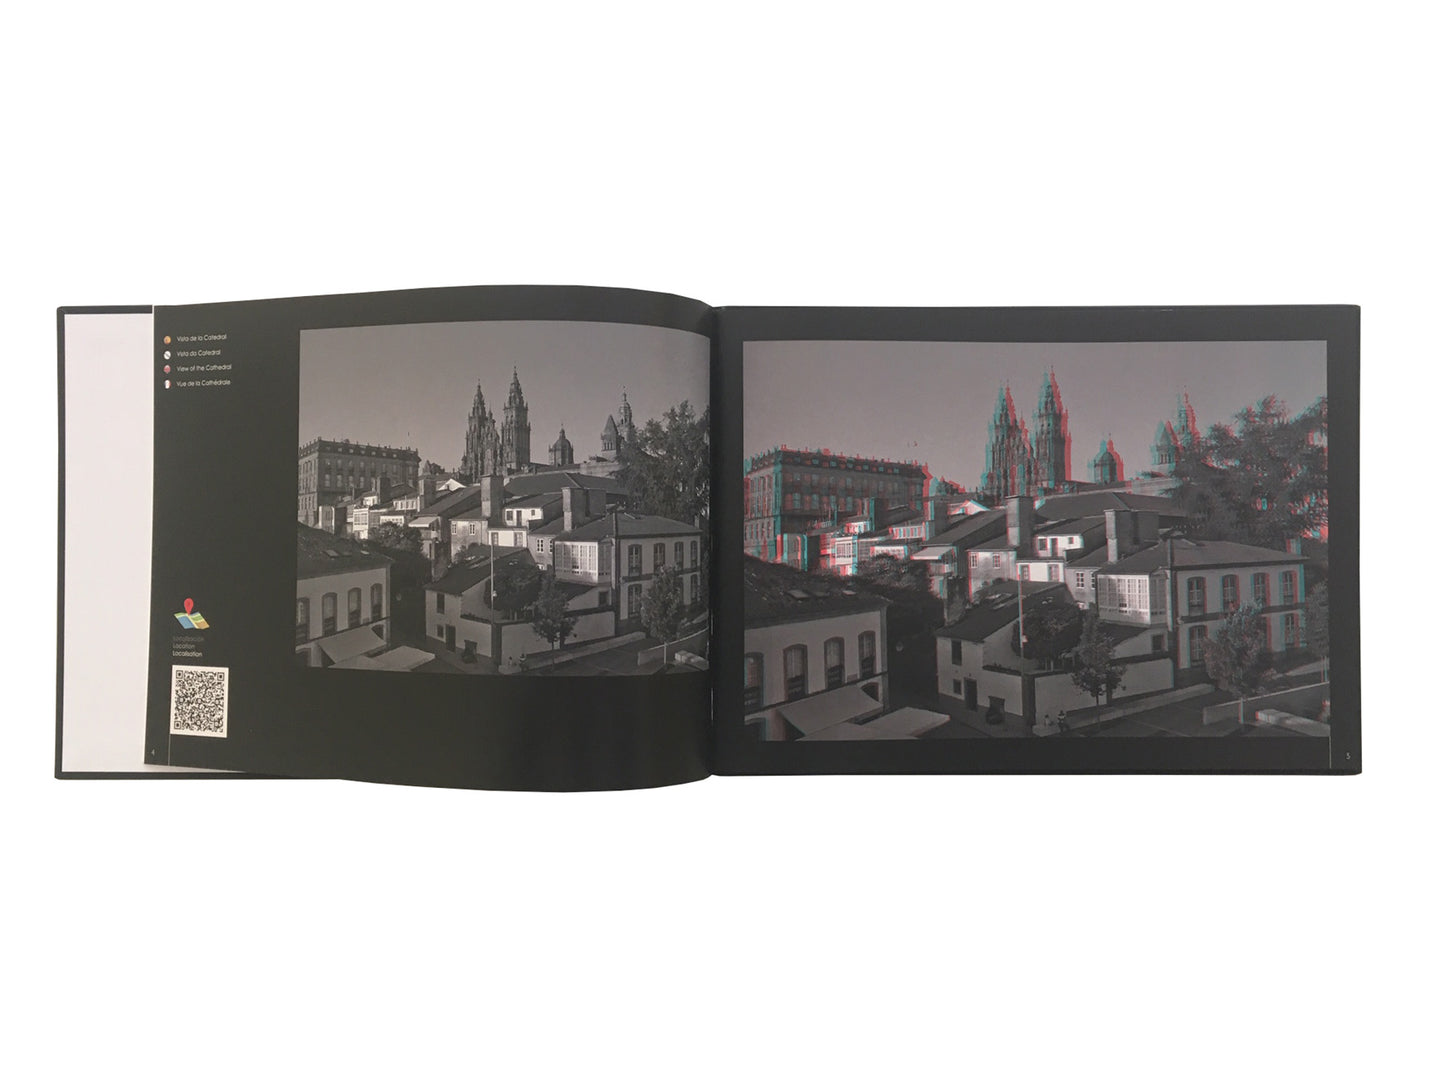 Santiago de Compostela photo book in 3D